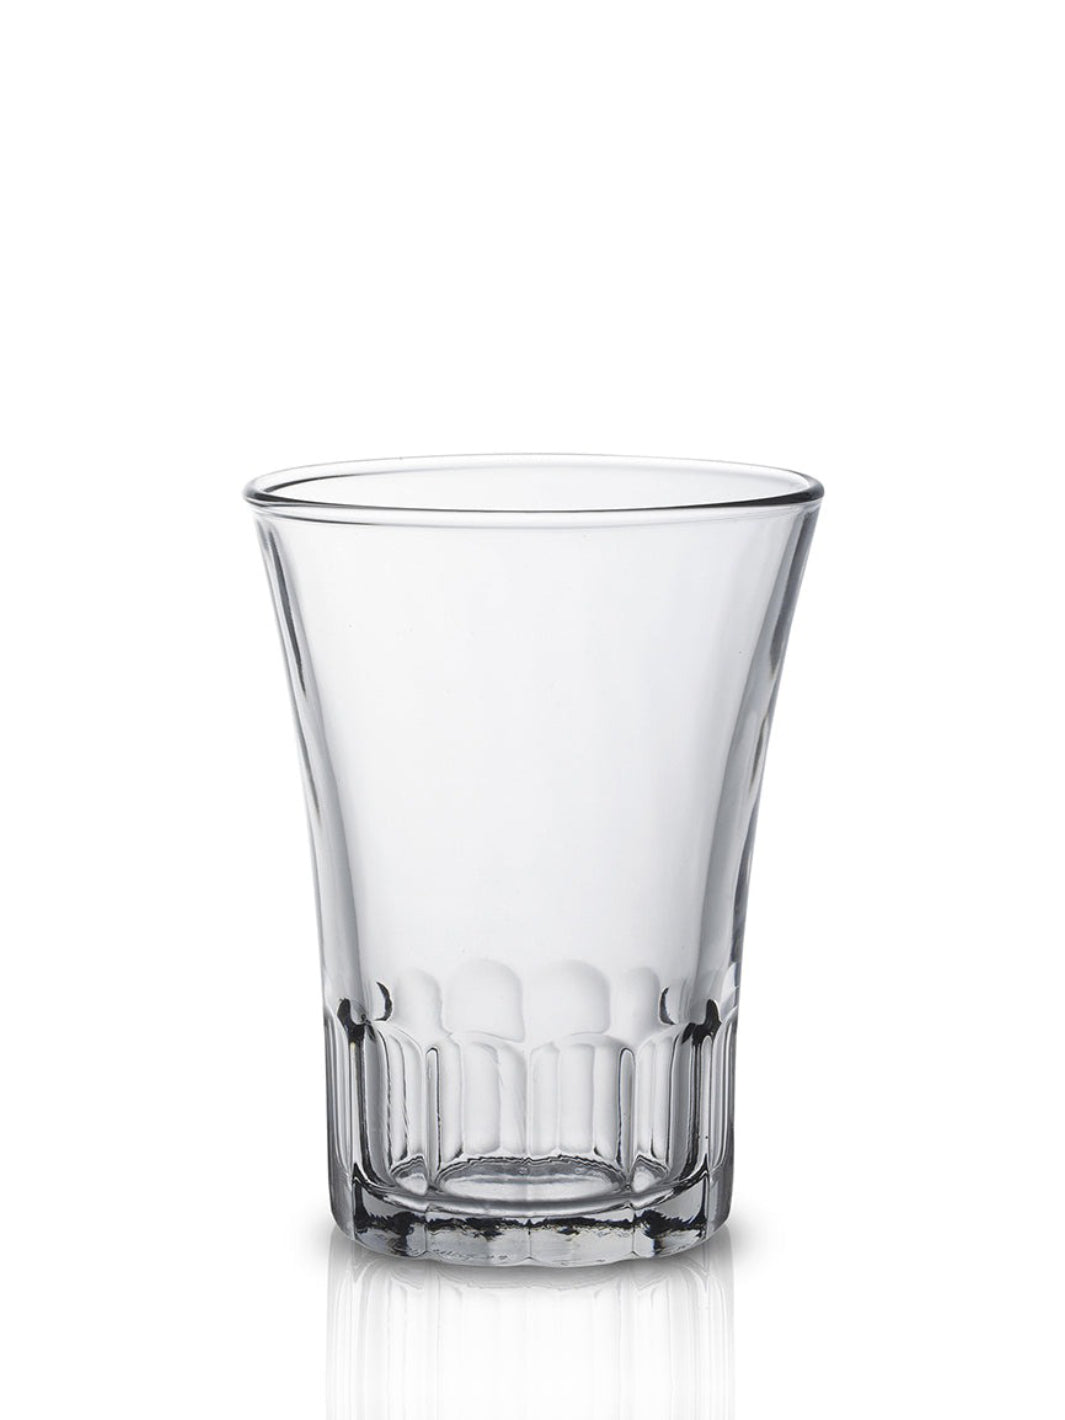 DURALEX Amalfi Glass Tumbler (200ml/6.8oz) (4-Pack)